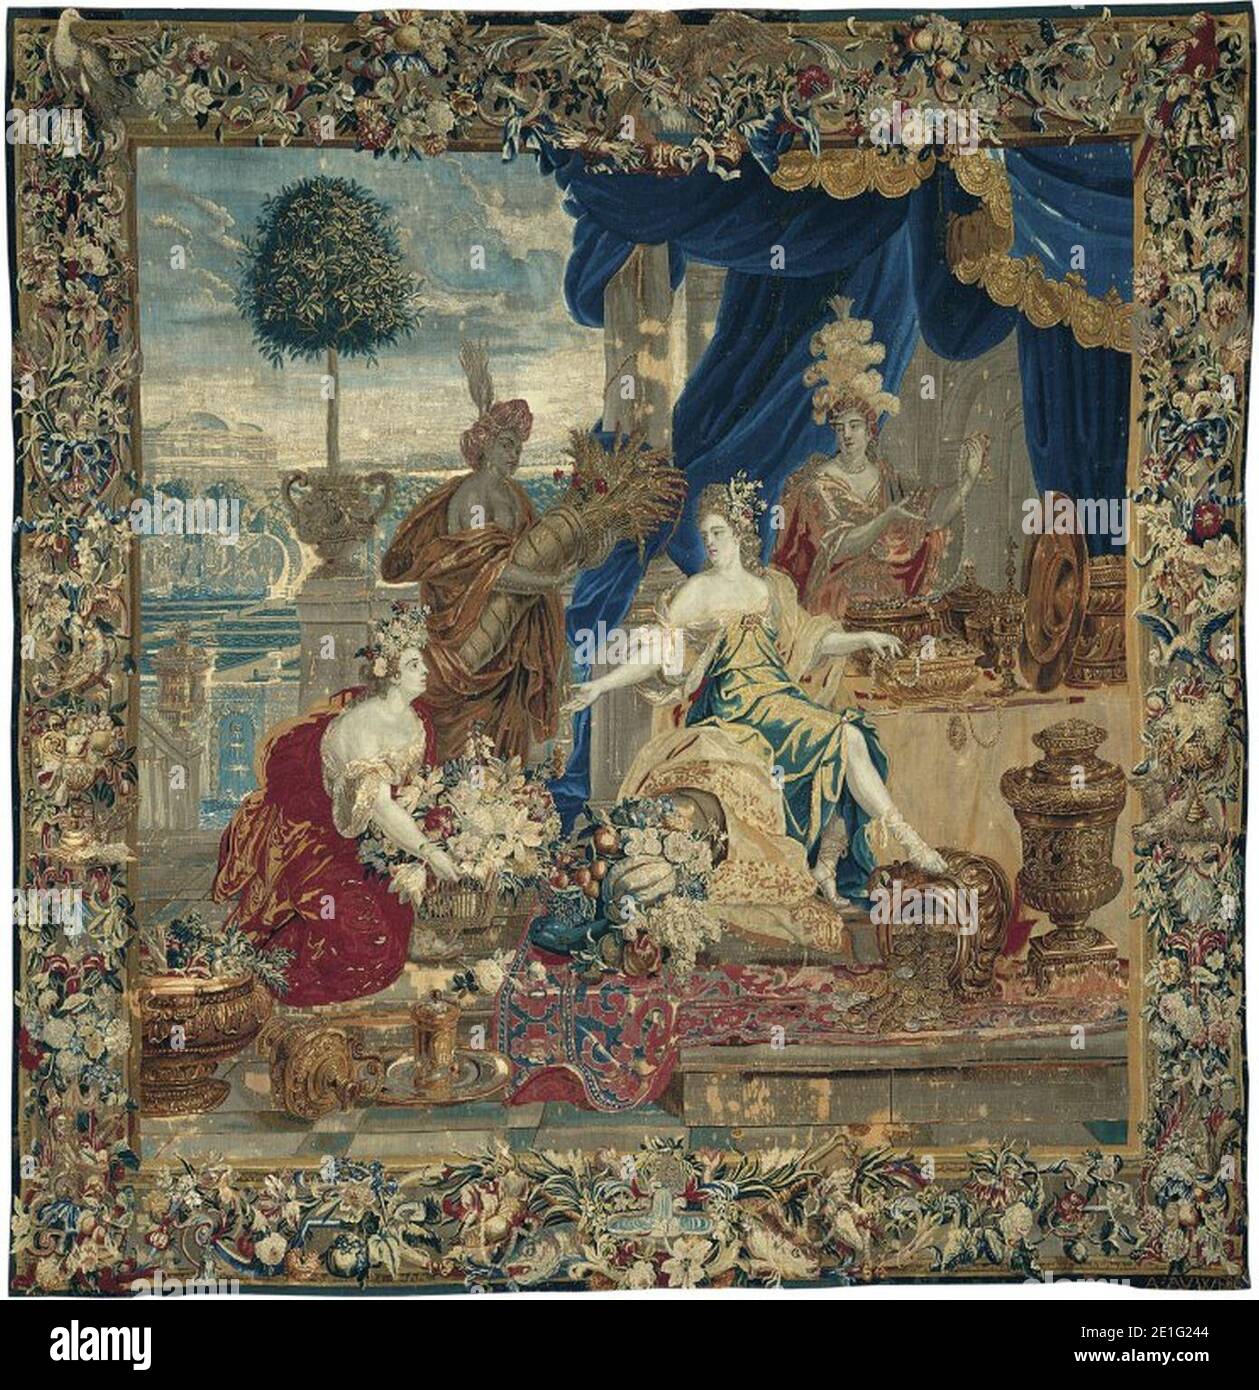 Lodewijk van Schoor e Pieter Spierinckx – Abundantia, dei quattro continenti e relative allegorie. Foto Stock